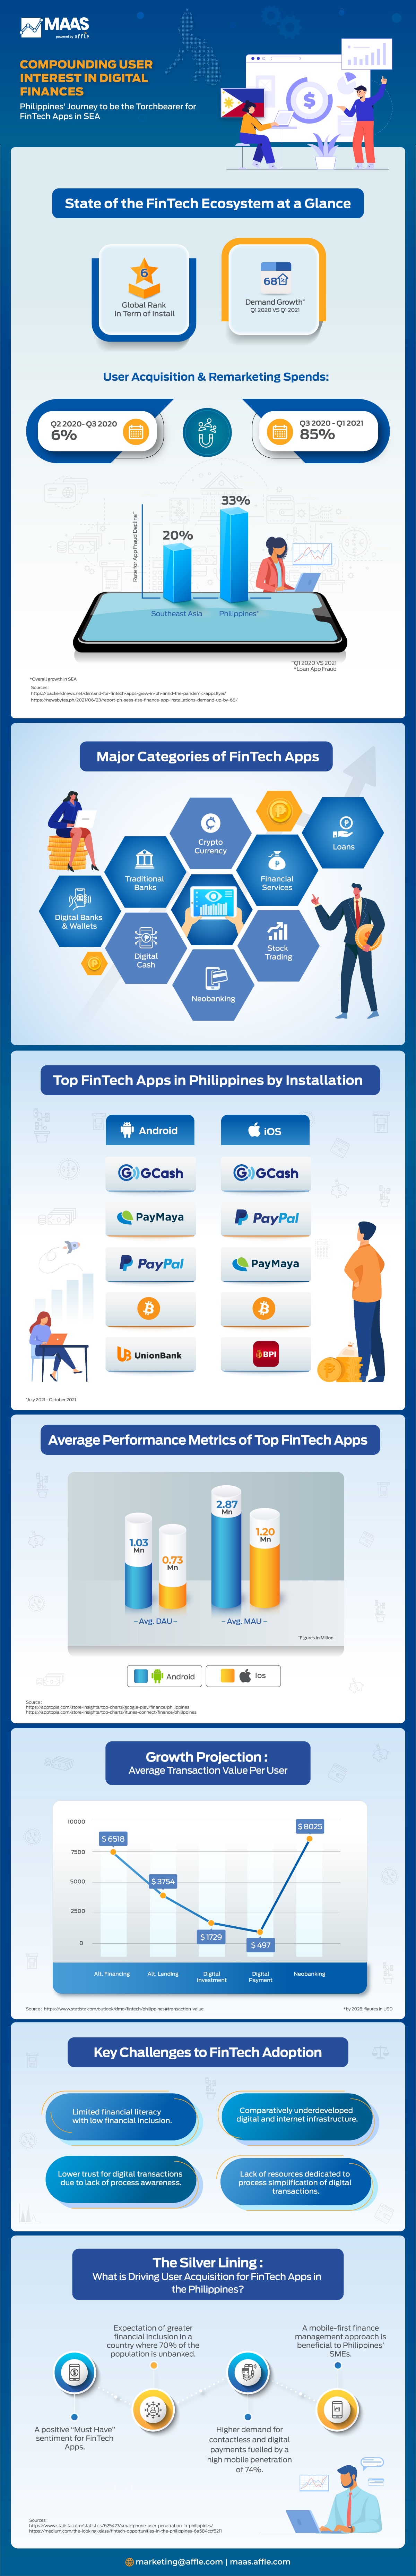 PH FinTech infographic